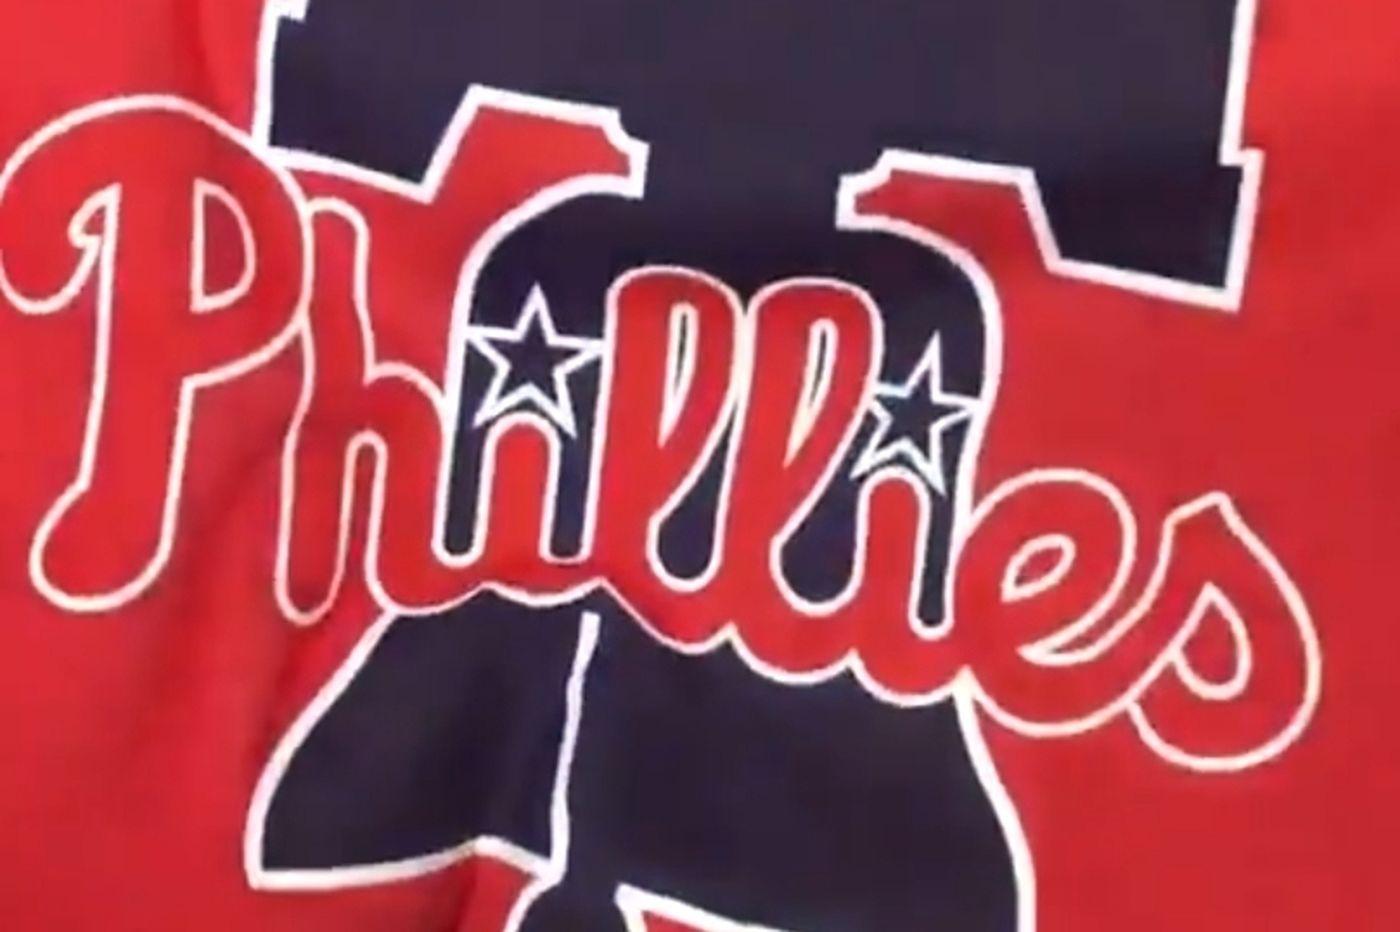 Philies Logo - Phillies reveal new primary logo